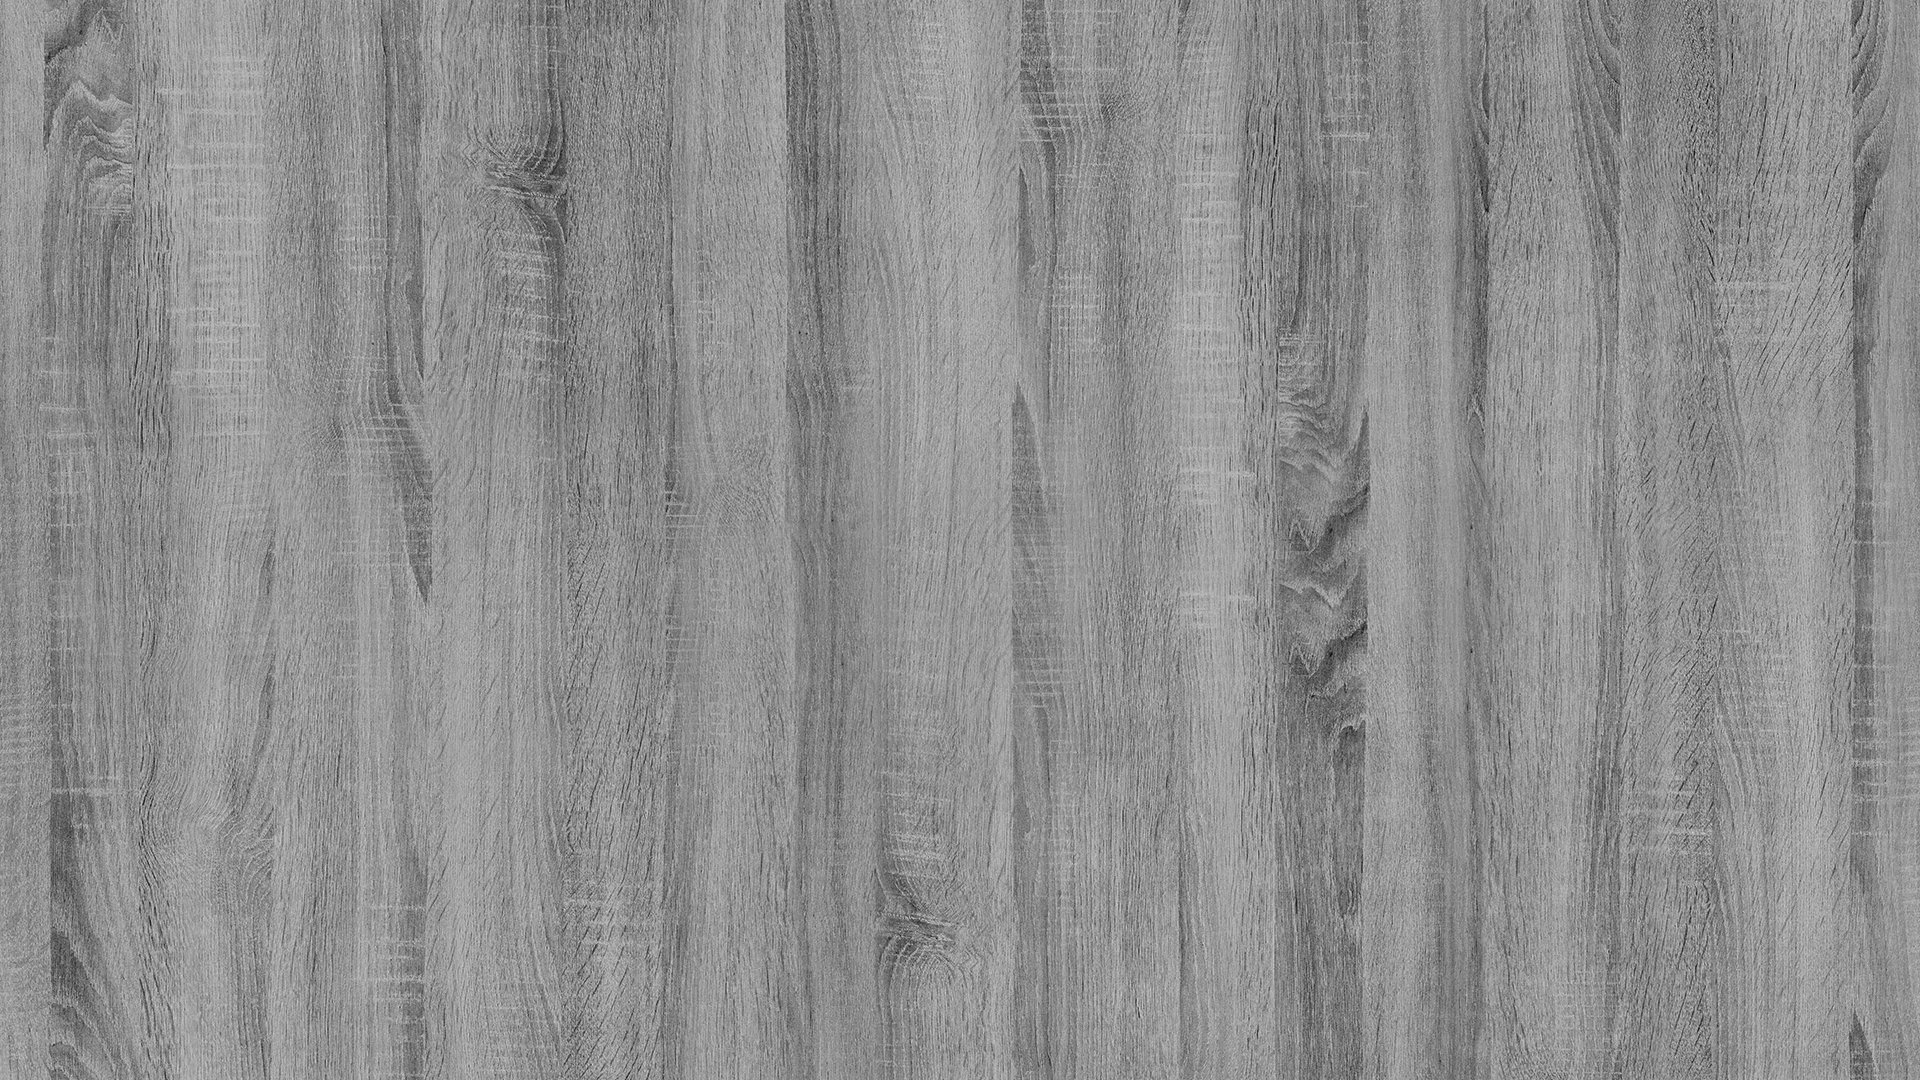 Oak wood  texture  FlyingArchitecture